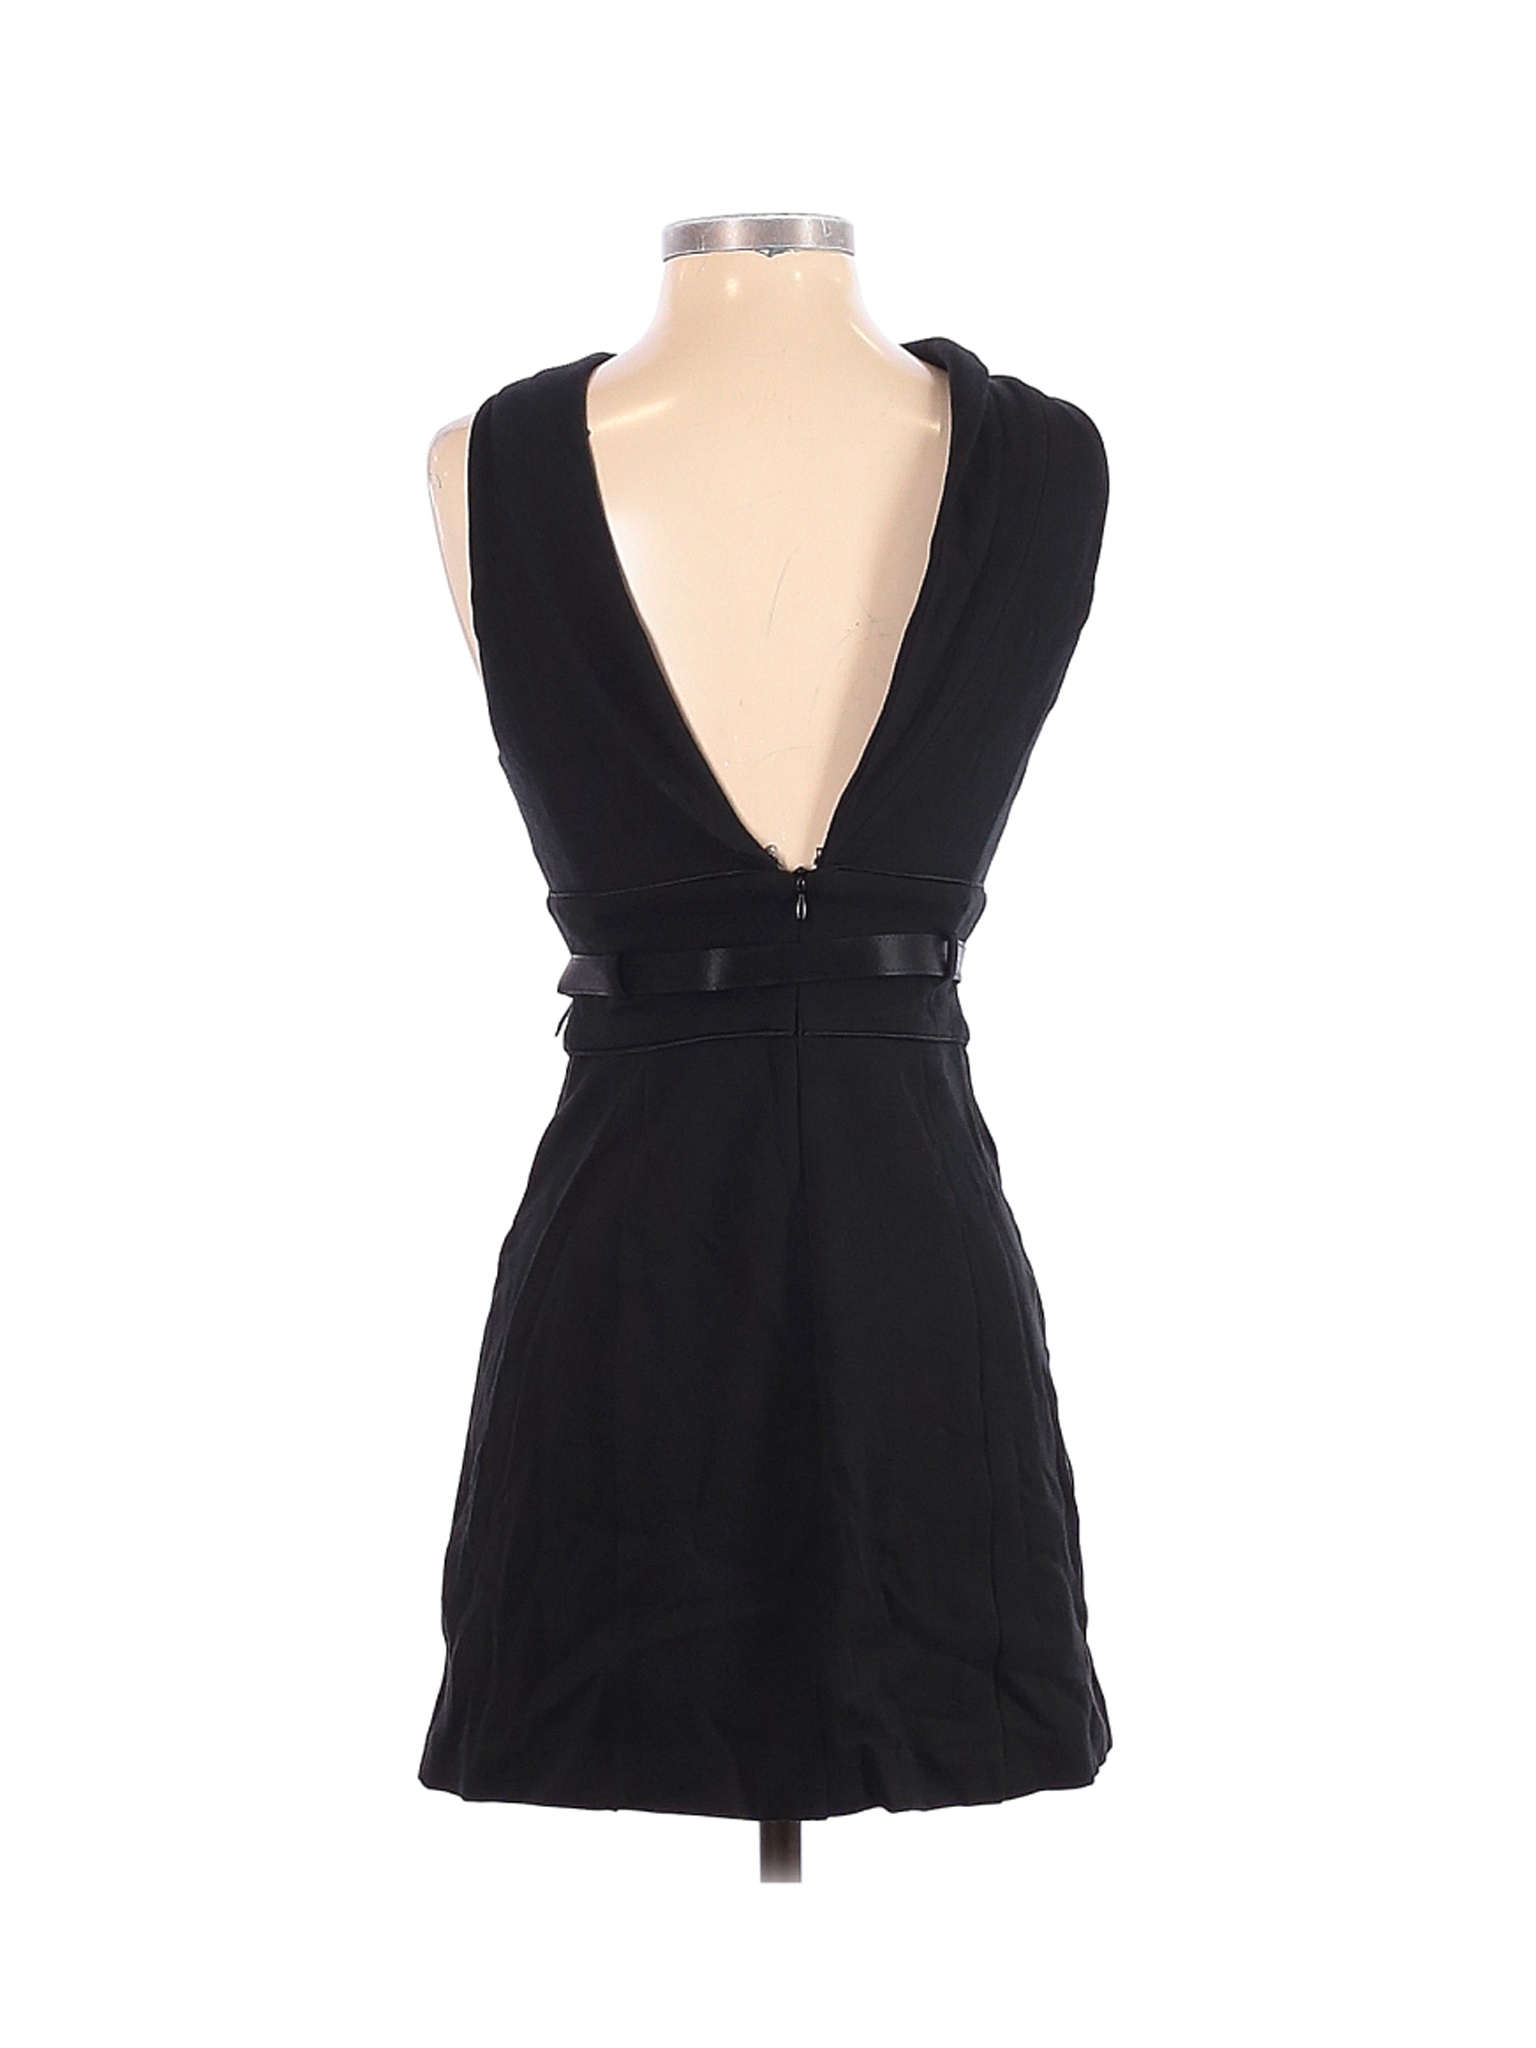 Bebe Women Black Cocktail Dress XS | eBay